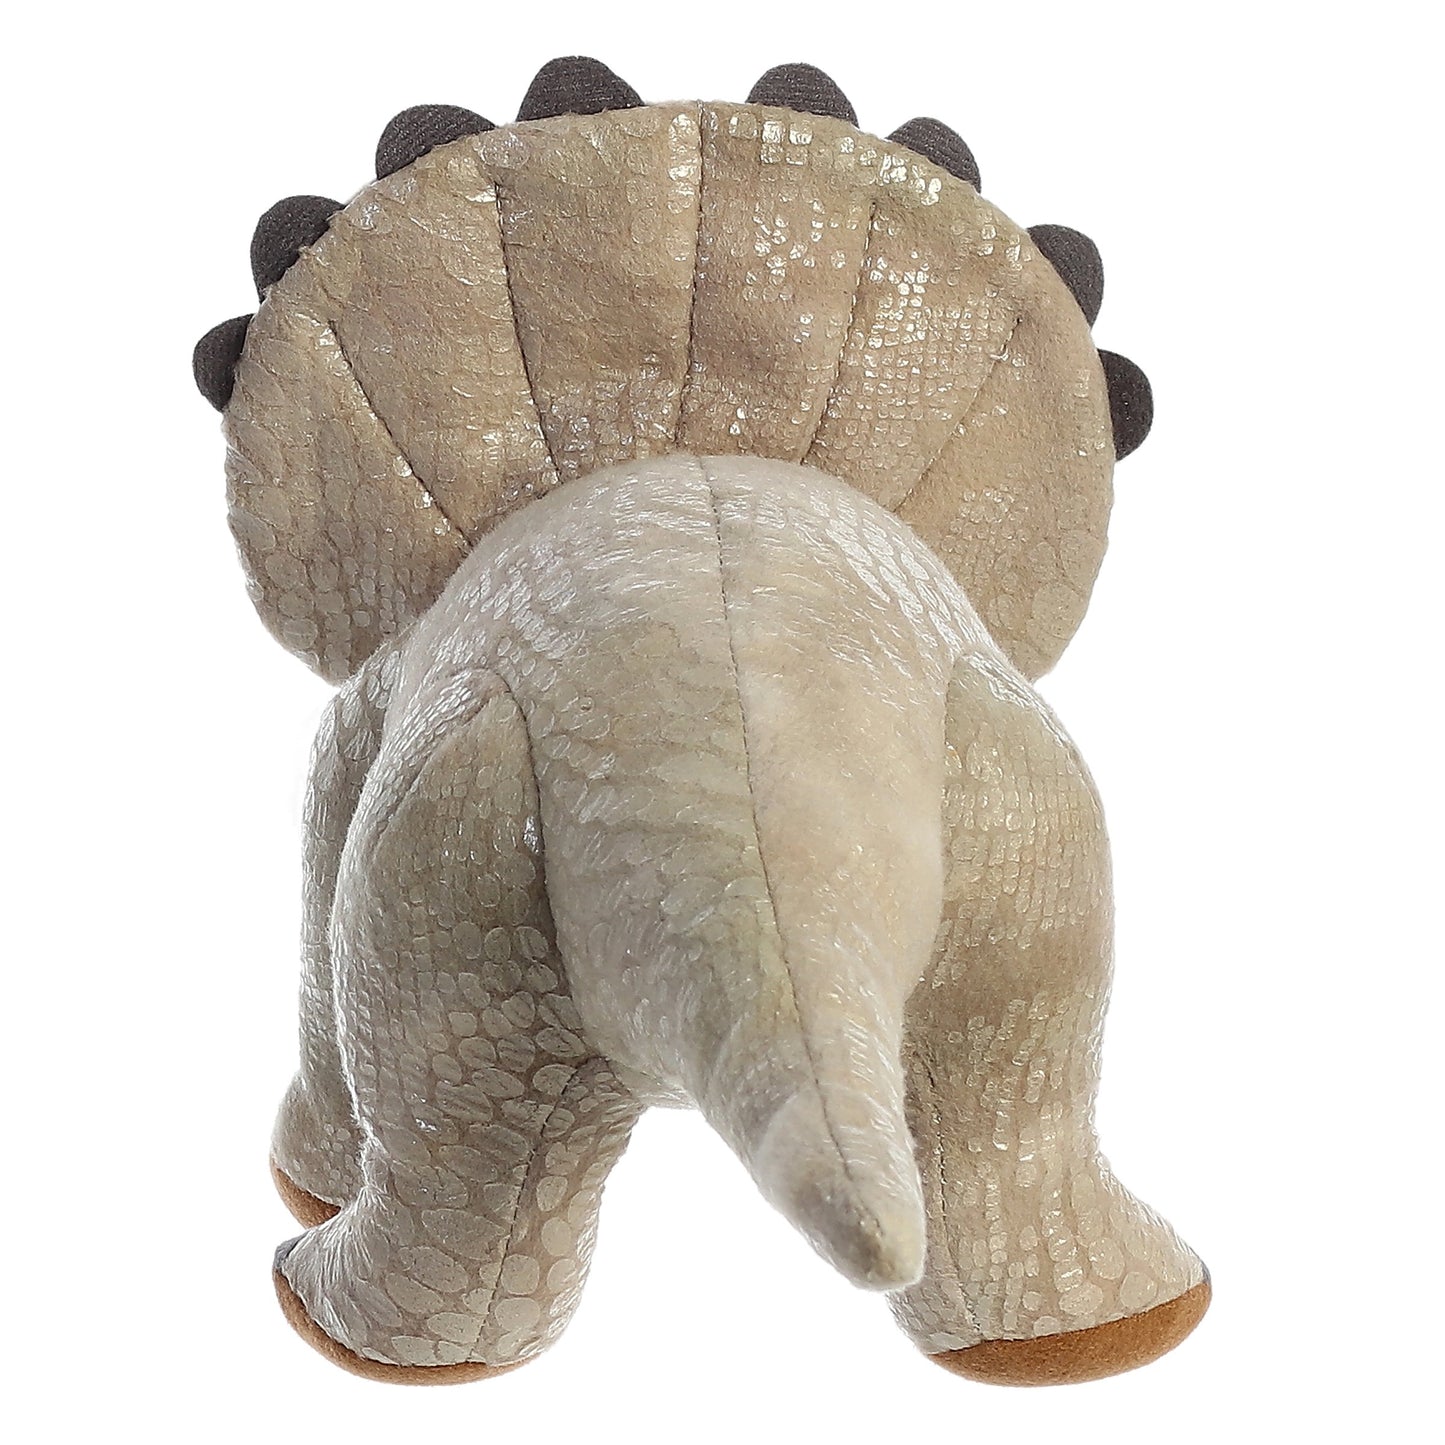 Plush - Triceratops